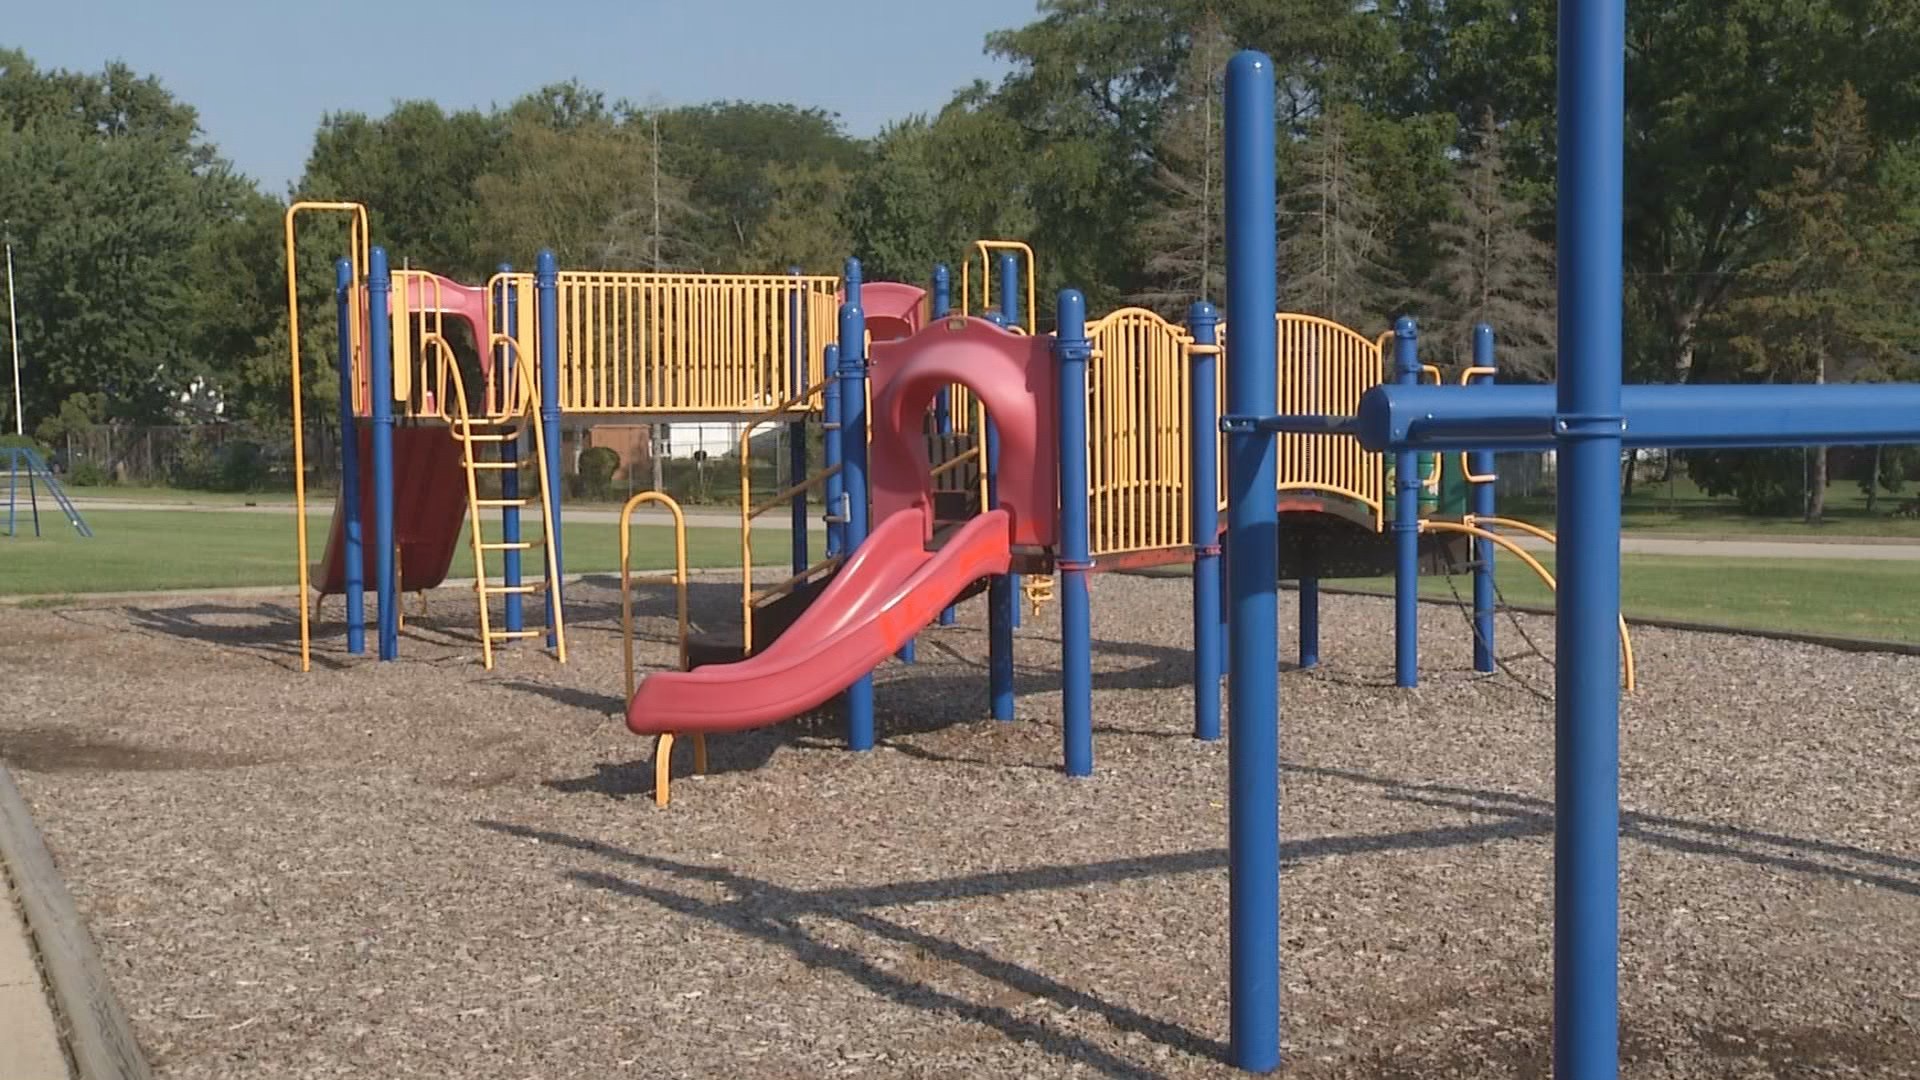 Saginaw elementary, playground becomes victim of vandalism - WNEM TV 5